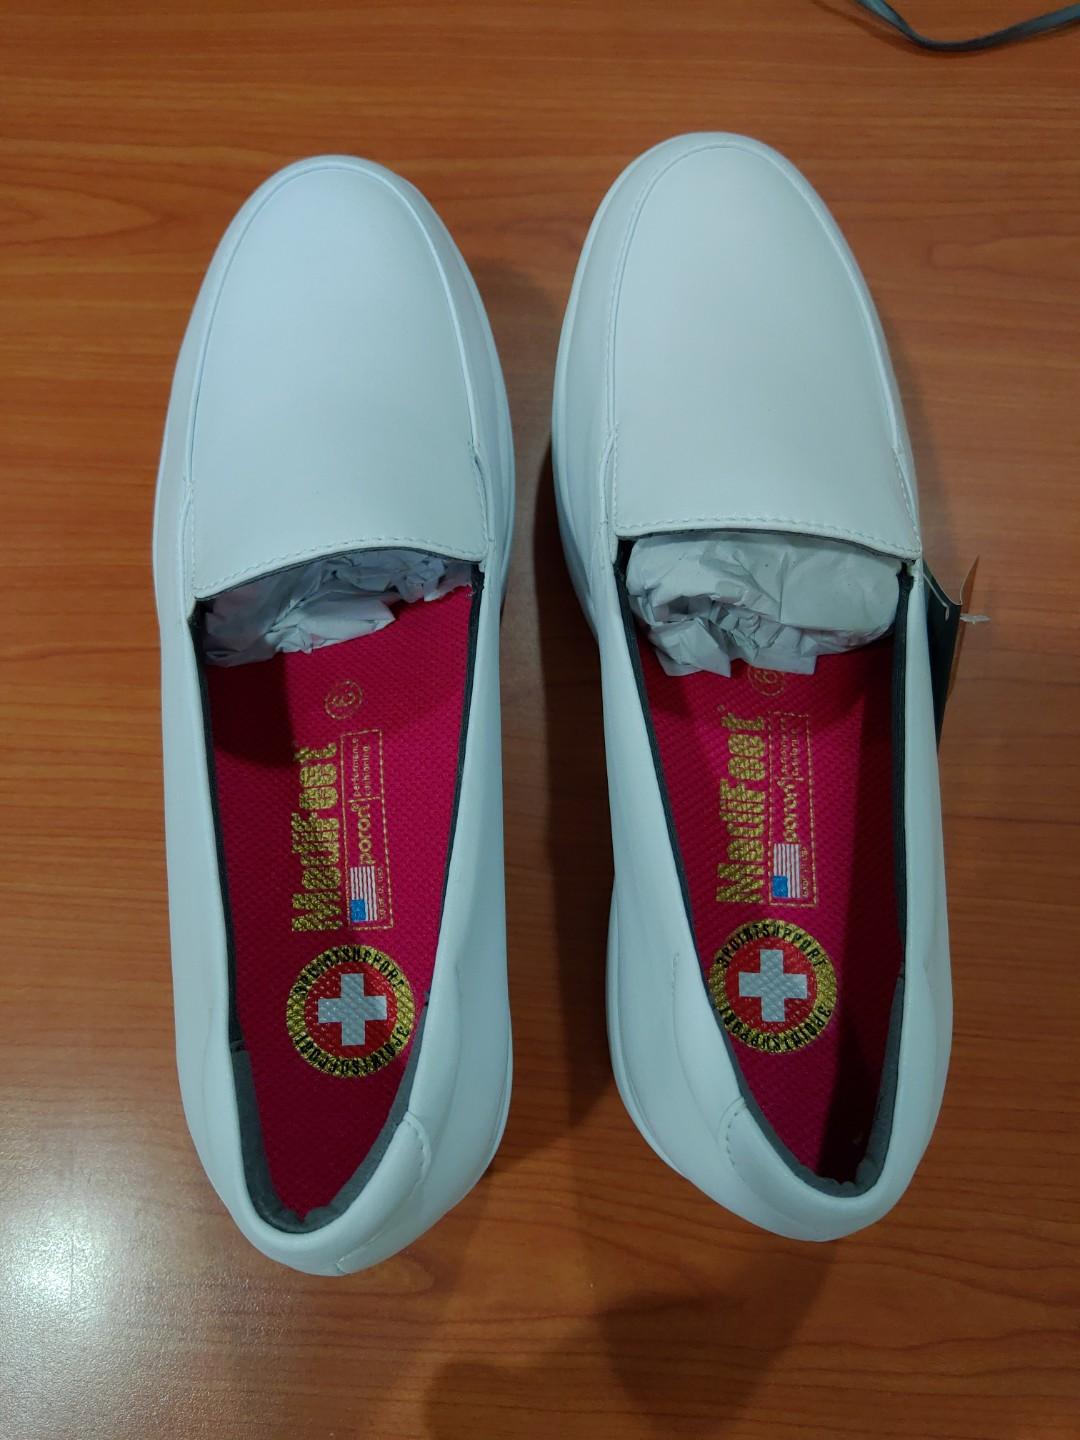 Medifeet Shoes White for Nurses, Women 